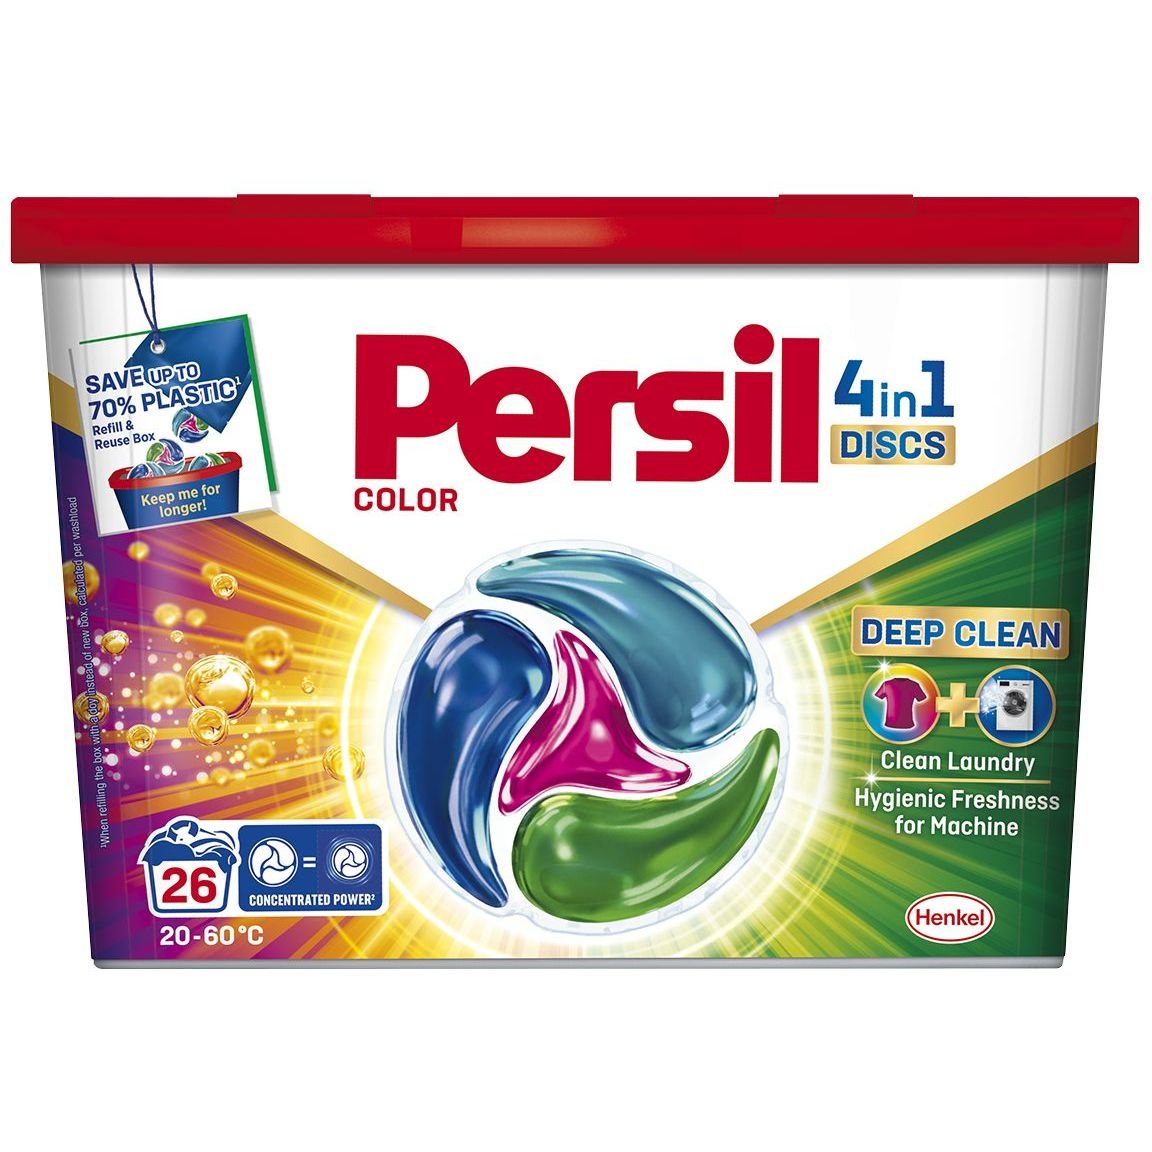 Диски для прання Persil Deep Clean Color 4 in 1 Discs 26 шт. - фото 1